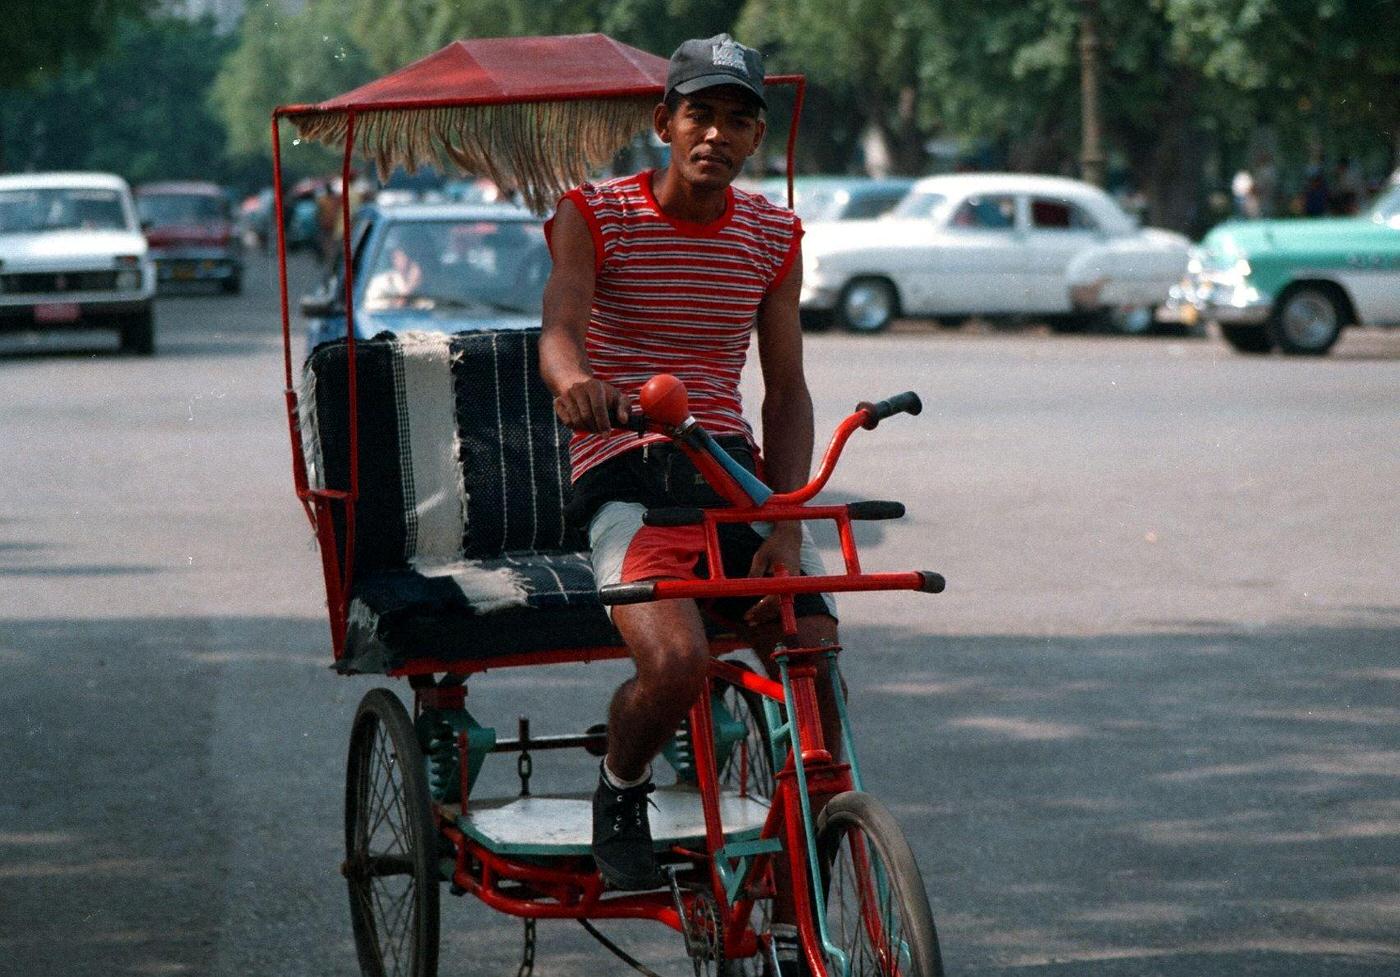 Local on a bicycle rickshaw in Havana, Cuba.